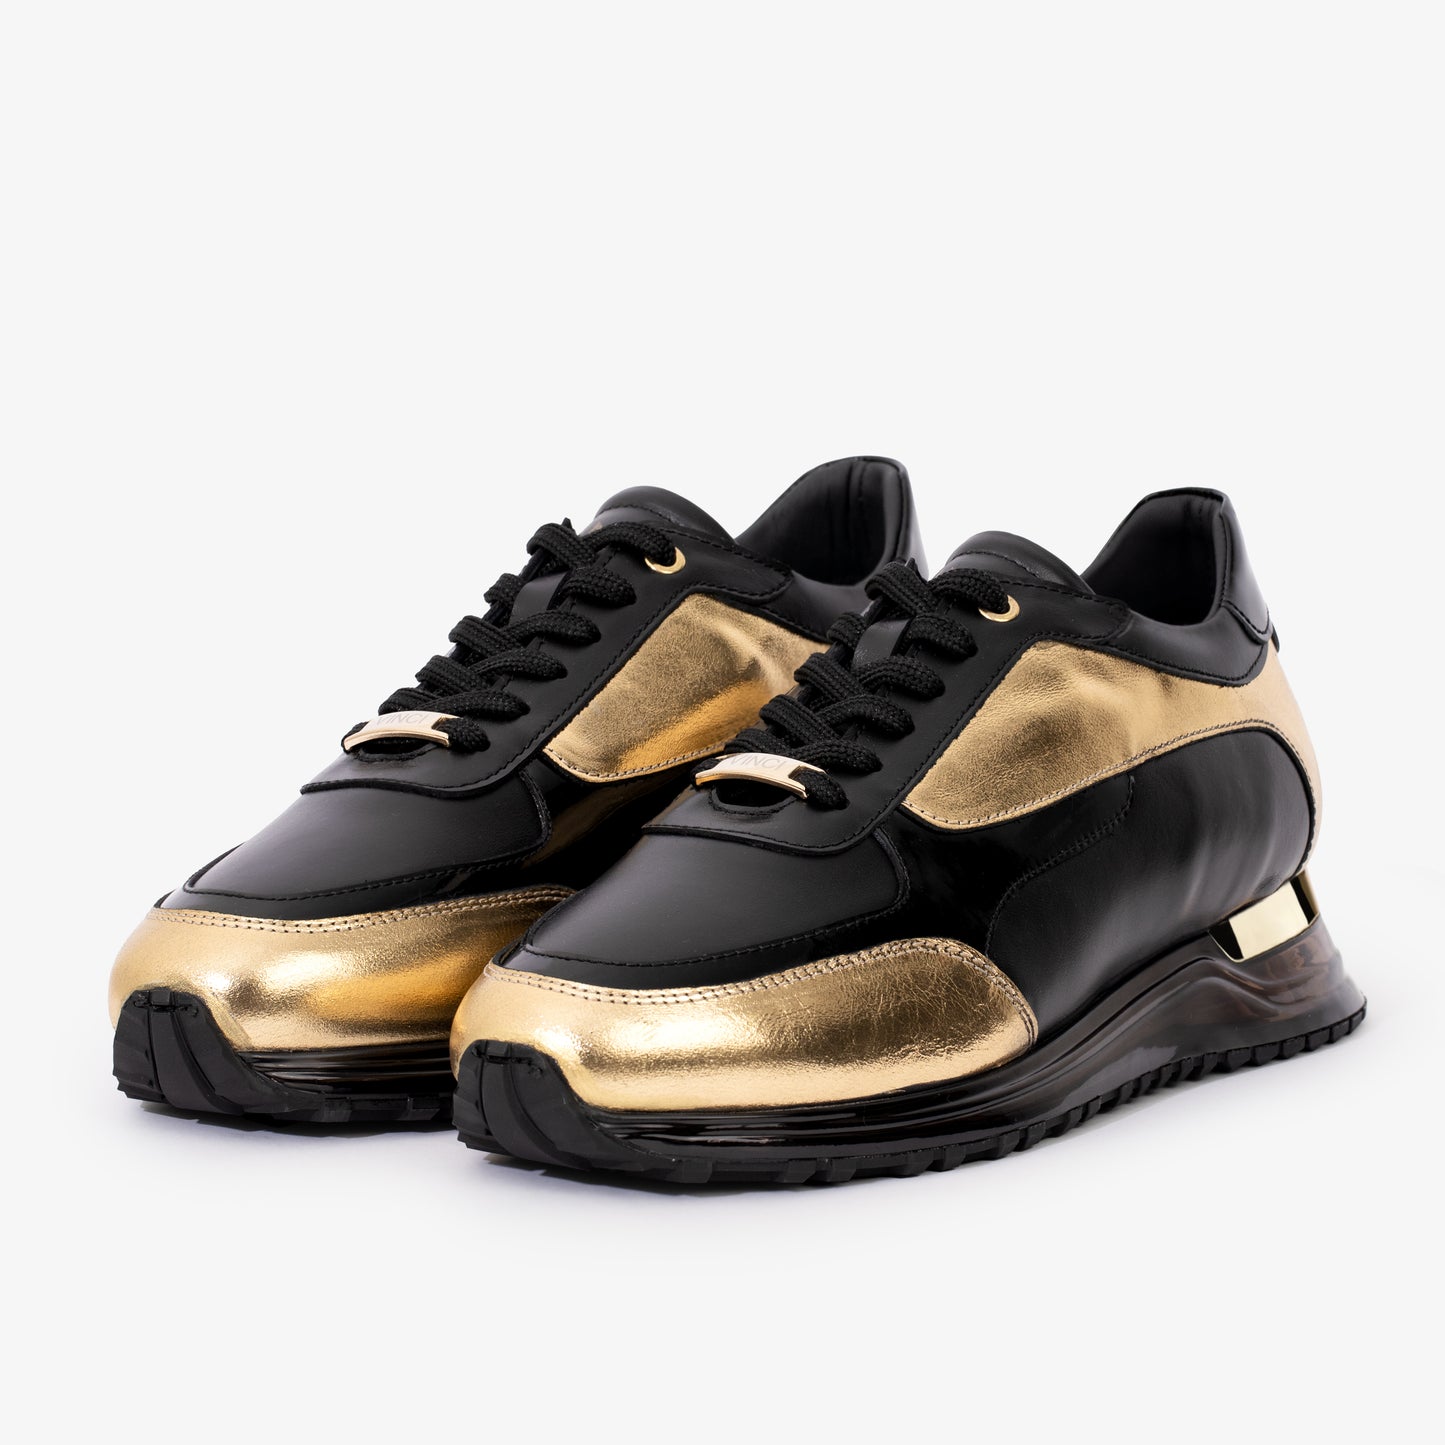 The Arda Black & Gold Leather Men Sneaker